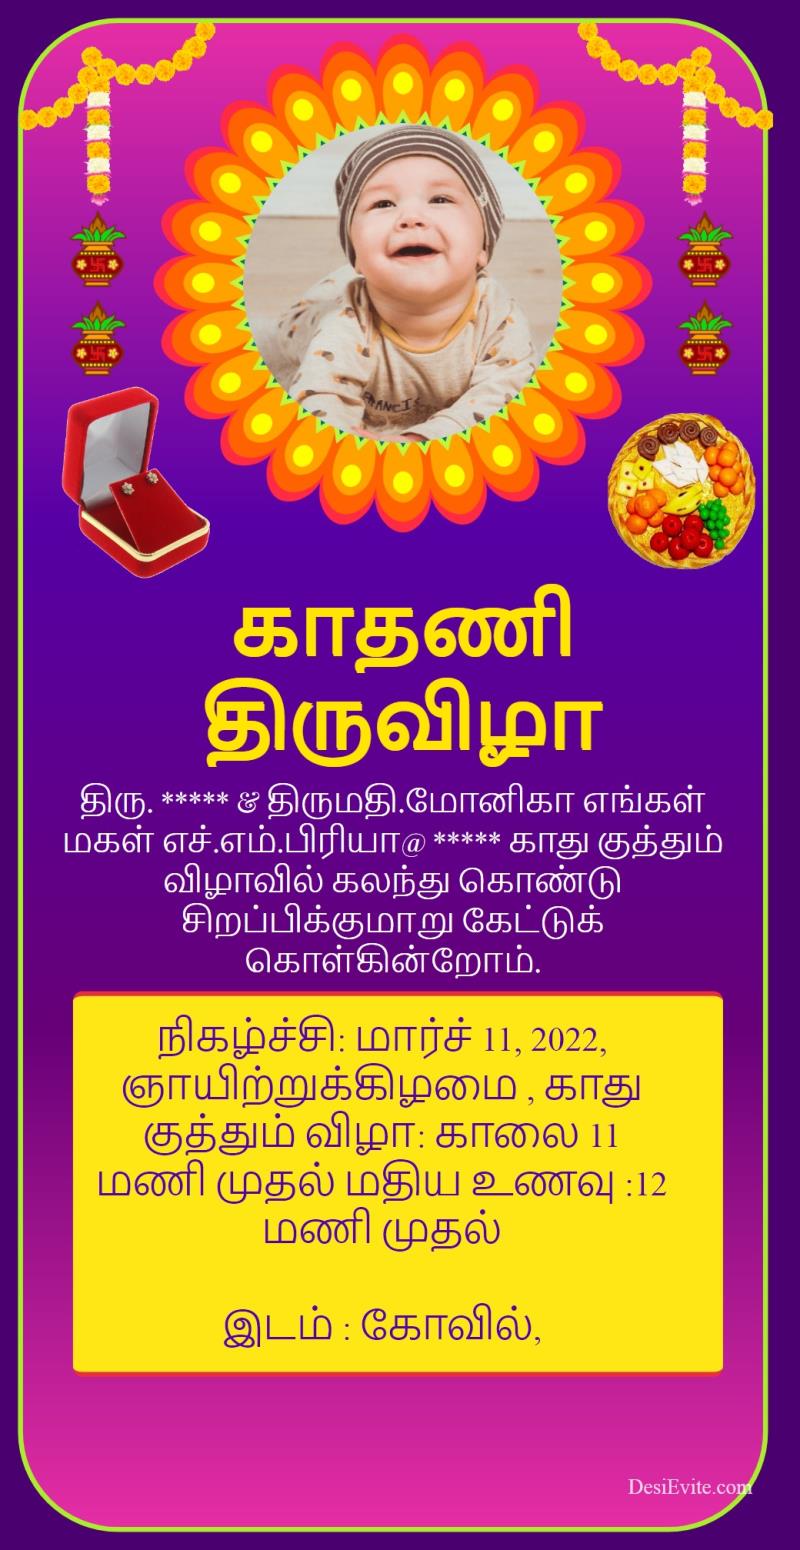 Tamil traditional ear piercing ceremony invitation card 124